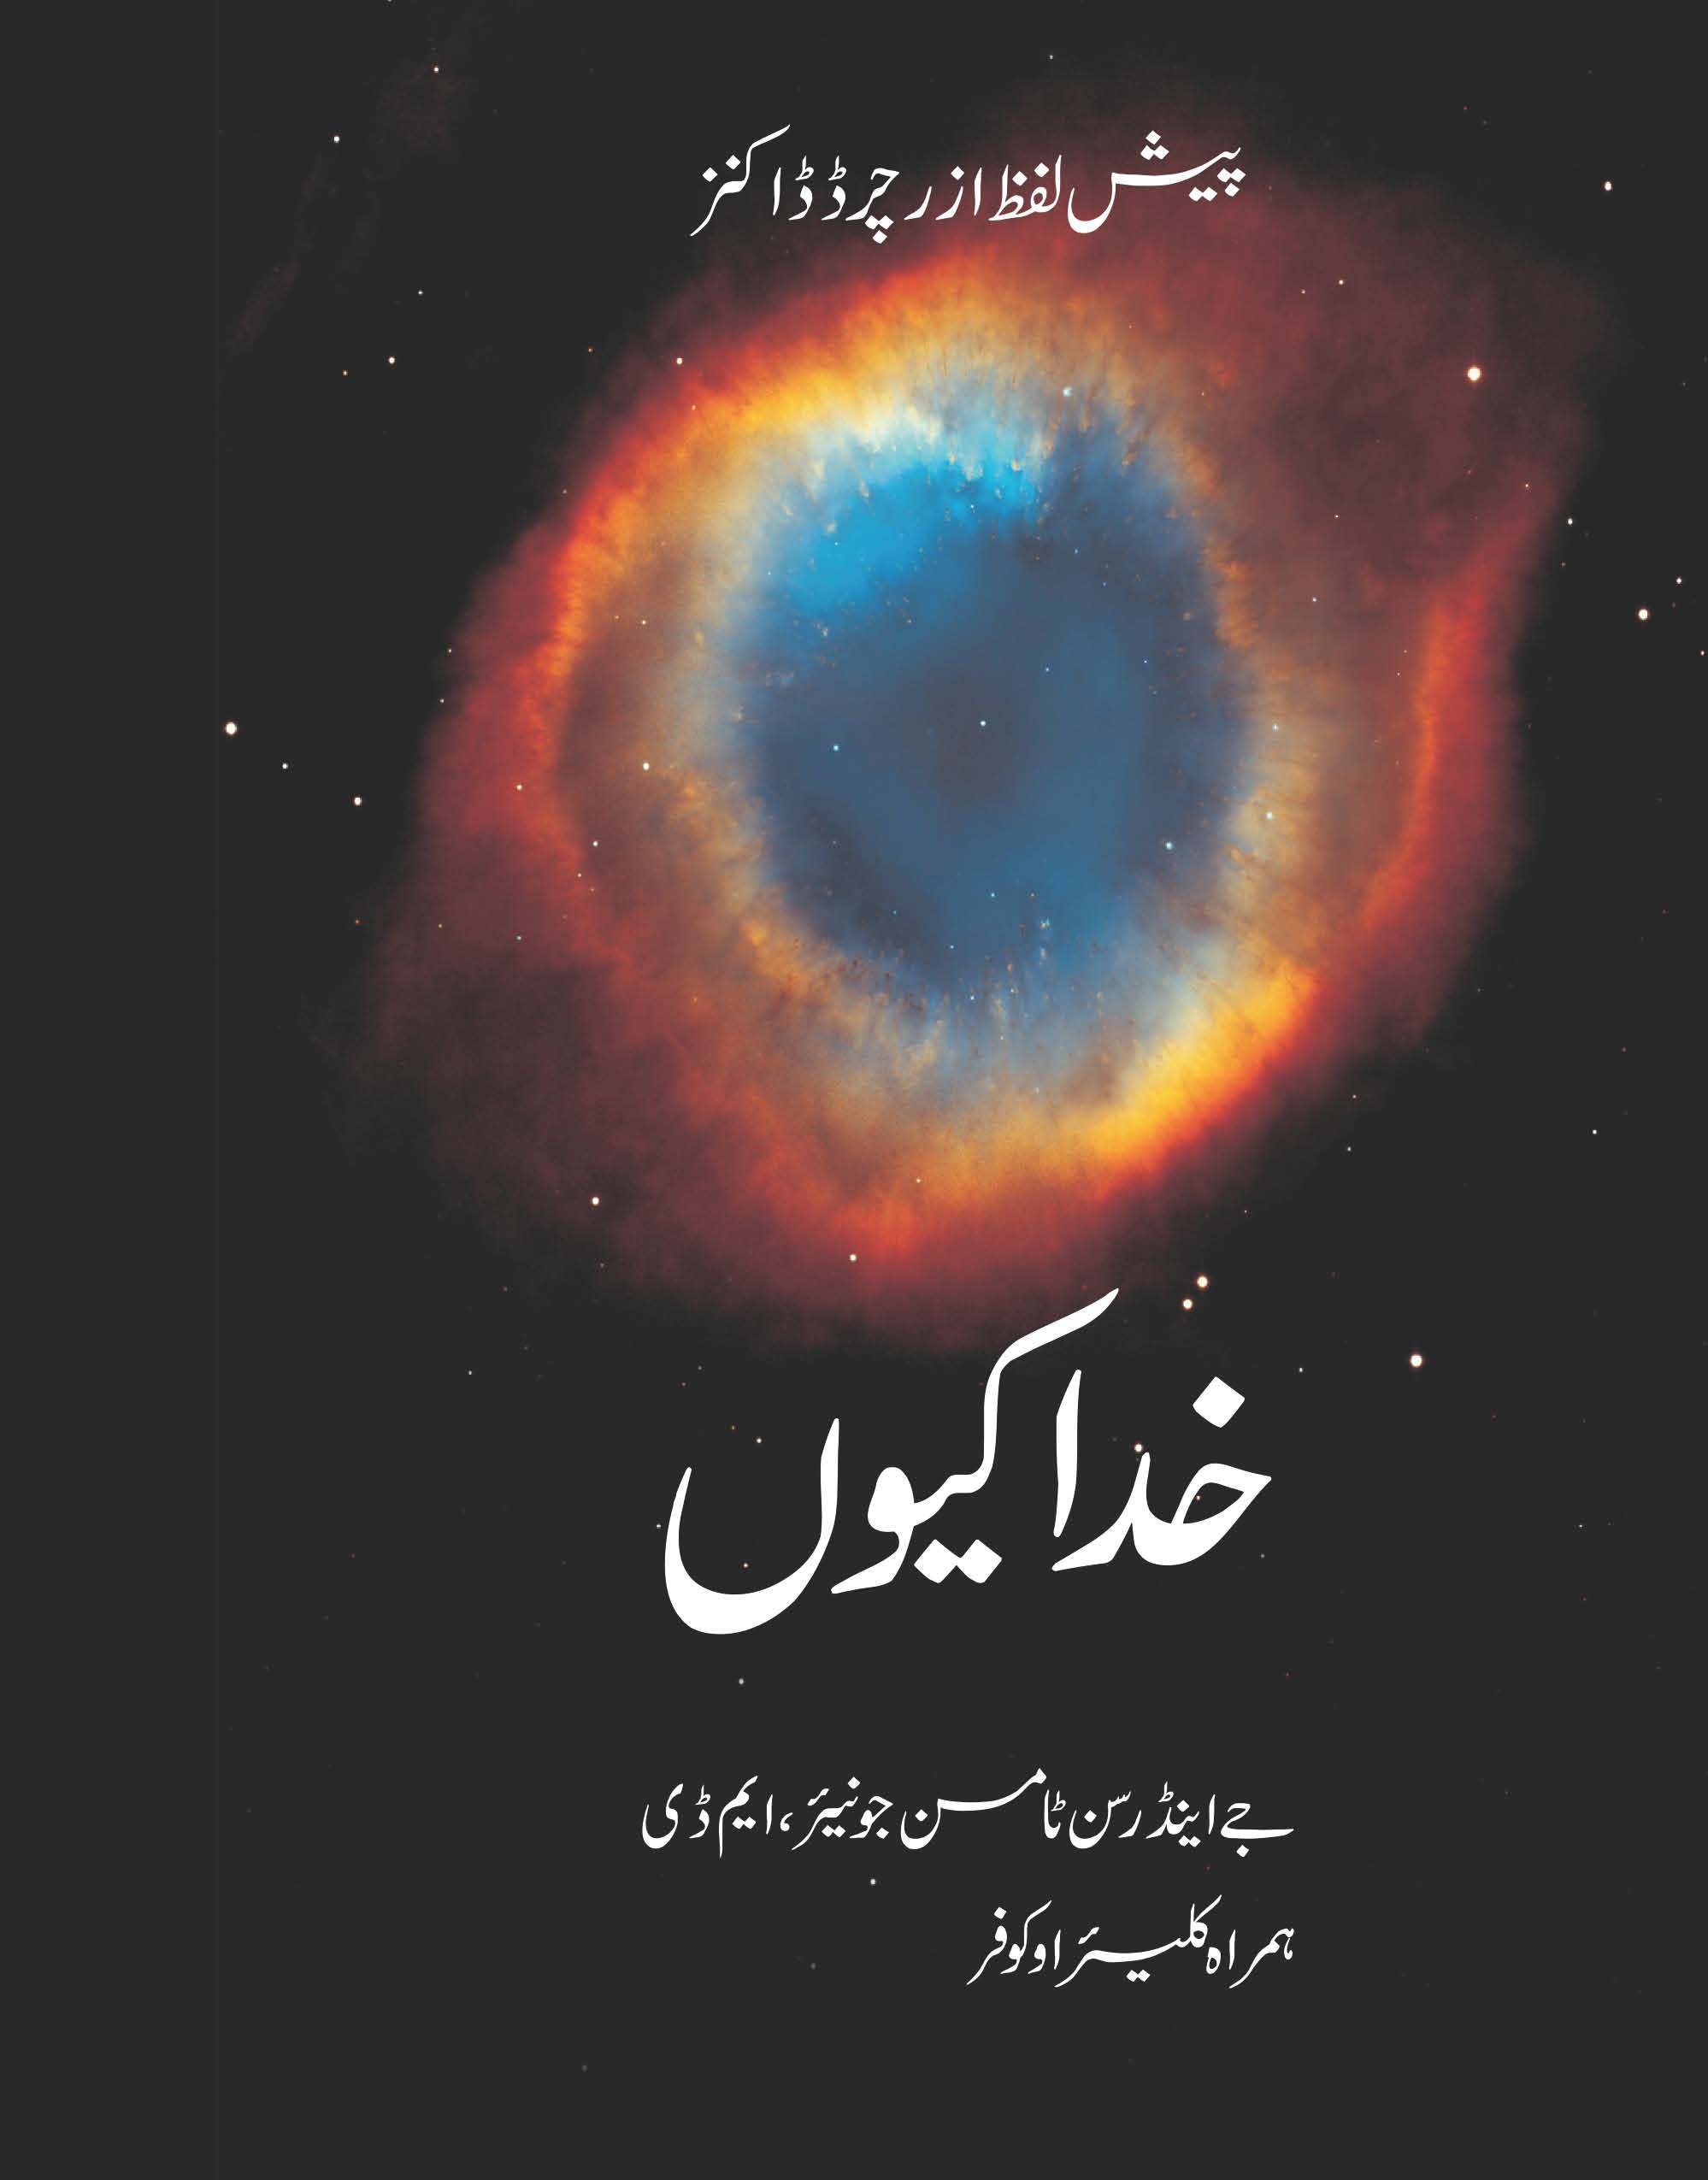 Urdu translation of “Why We Believe in Gods”